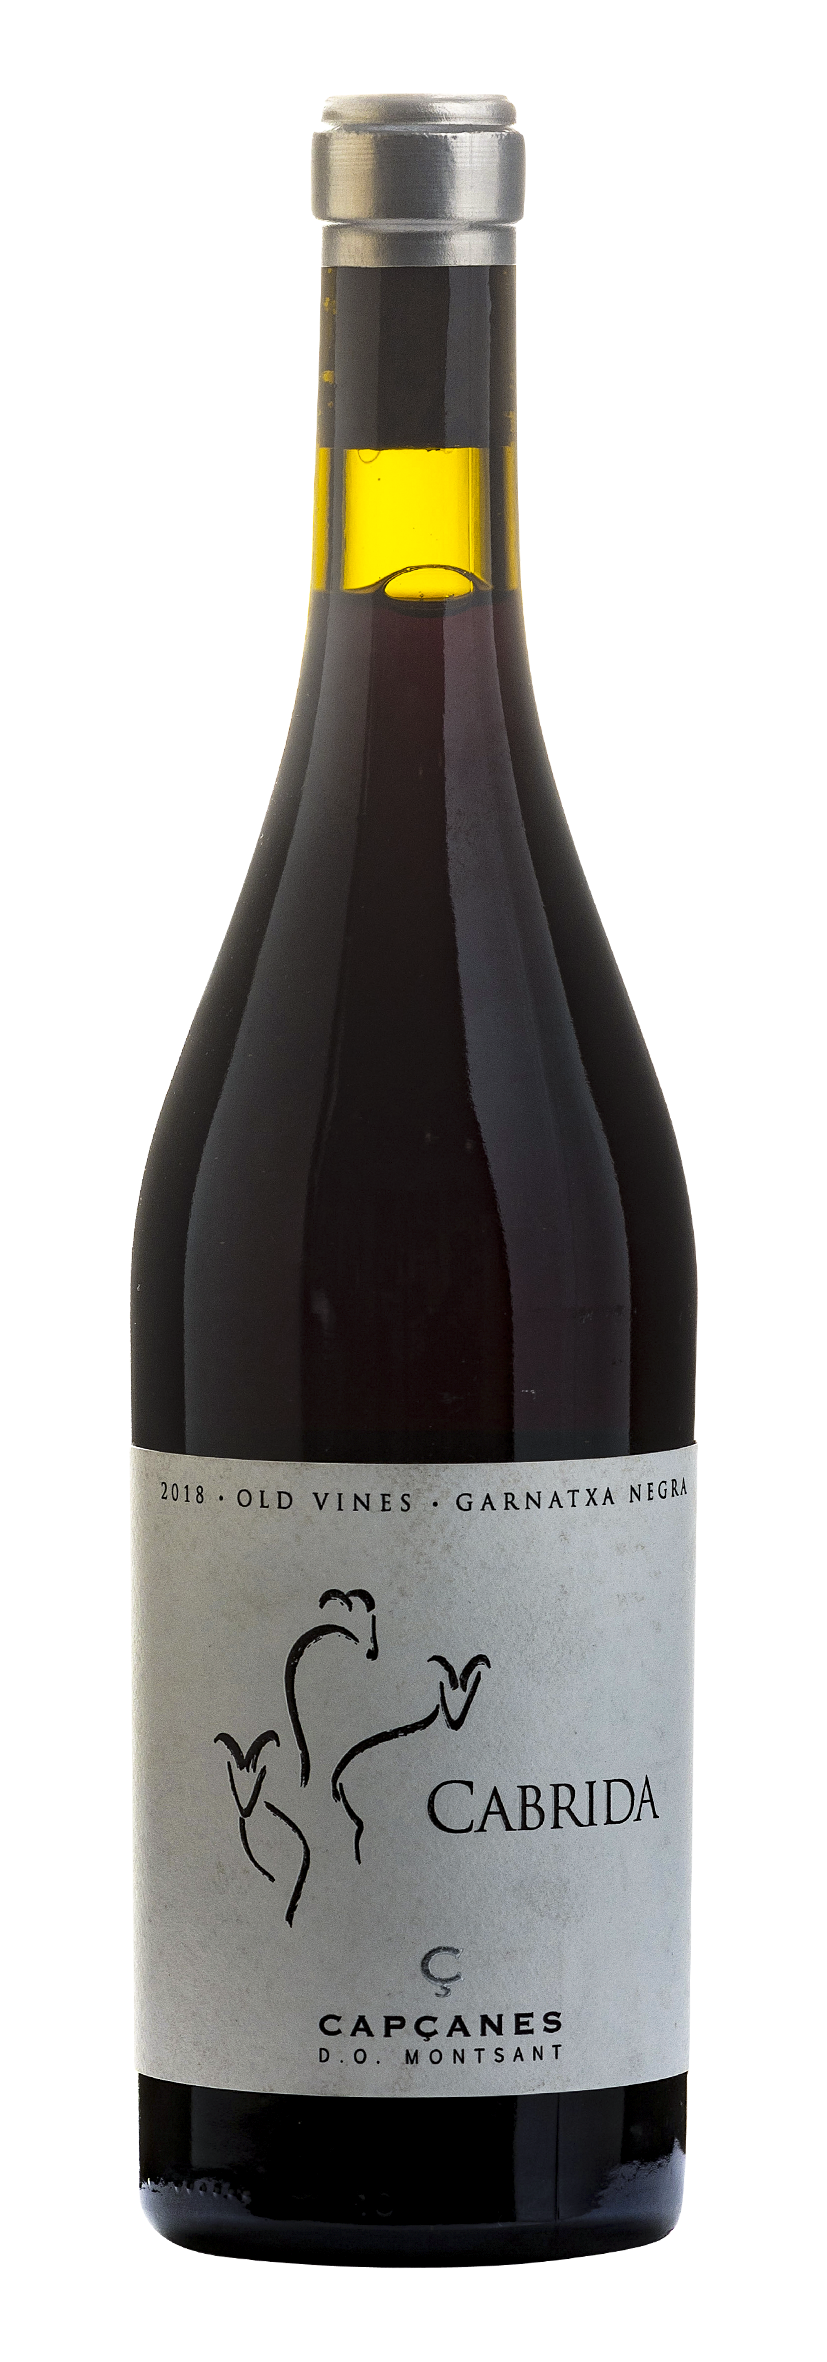 Montsant DO Cabrida Old Vines 2018